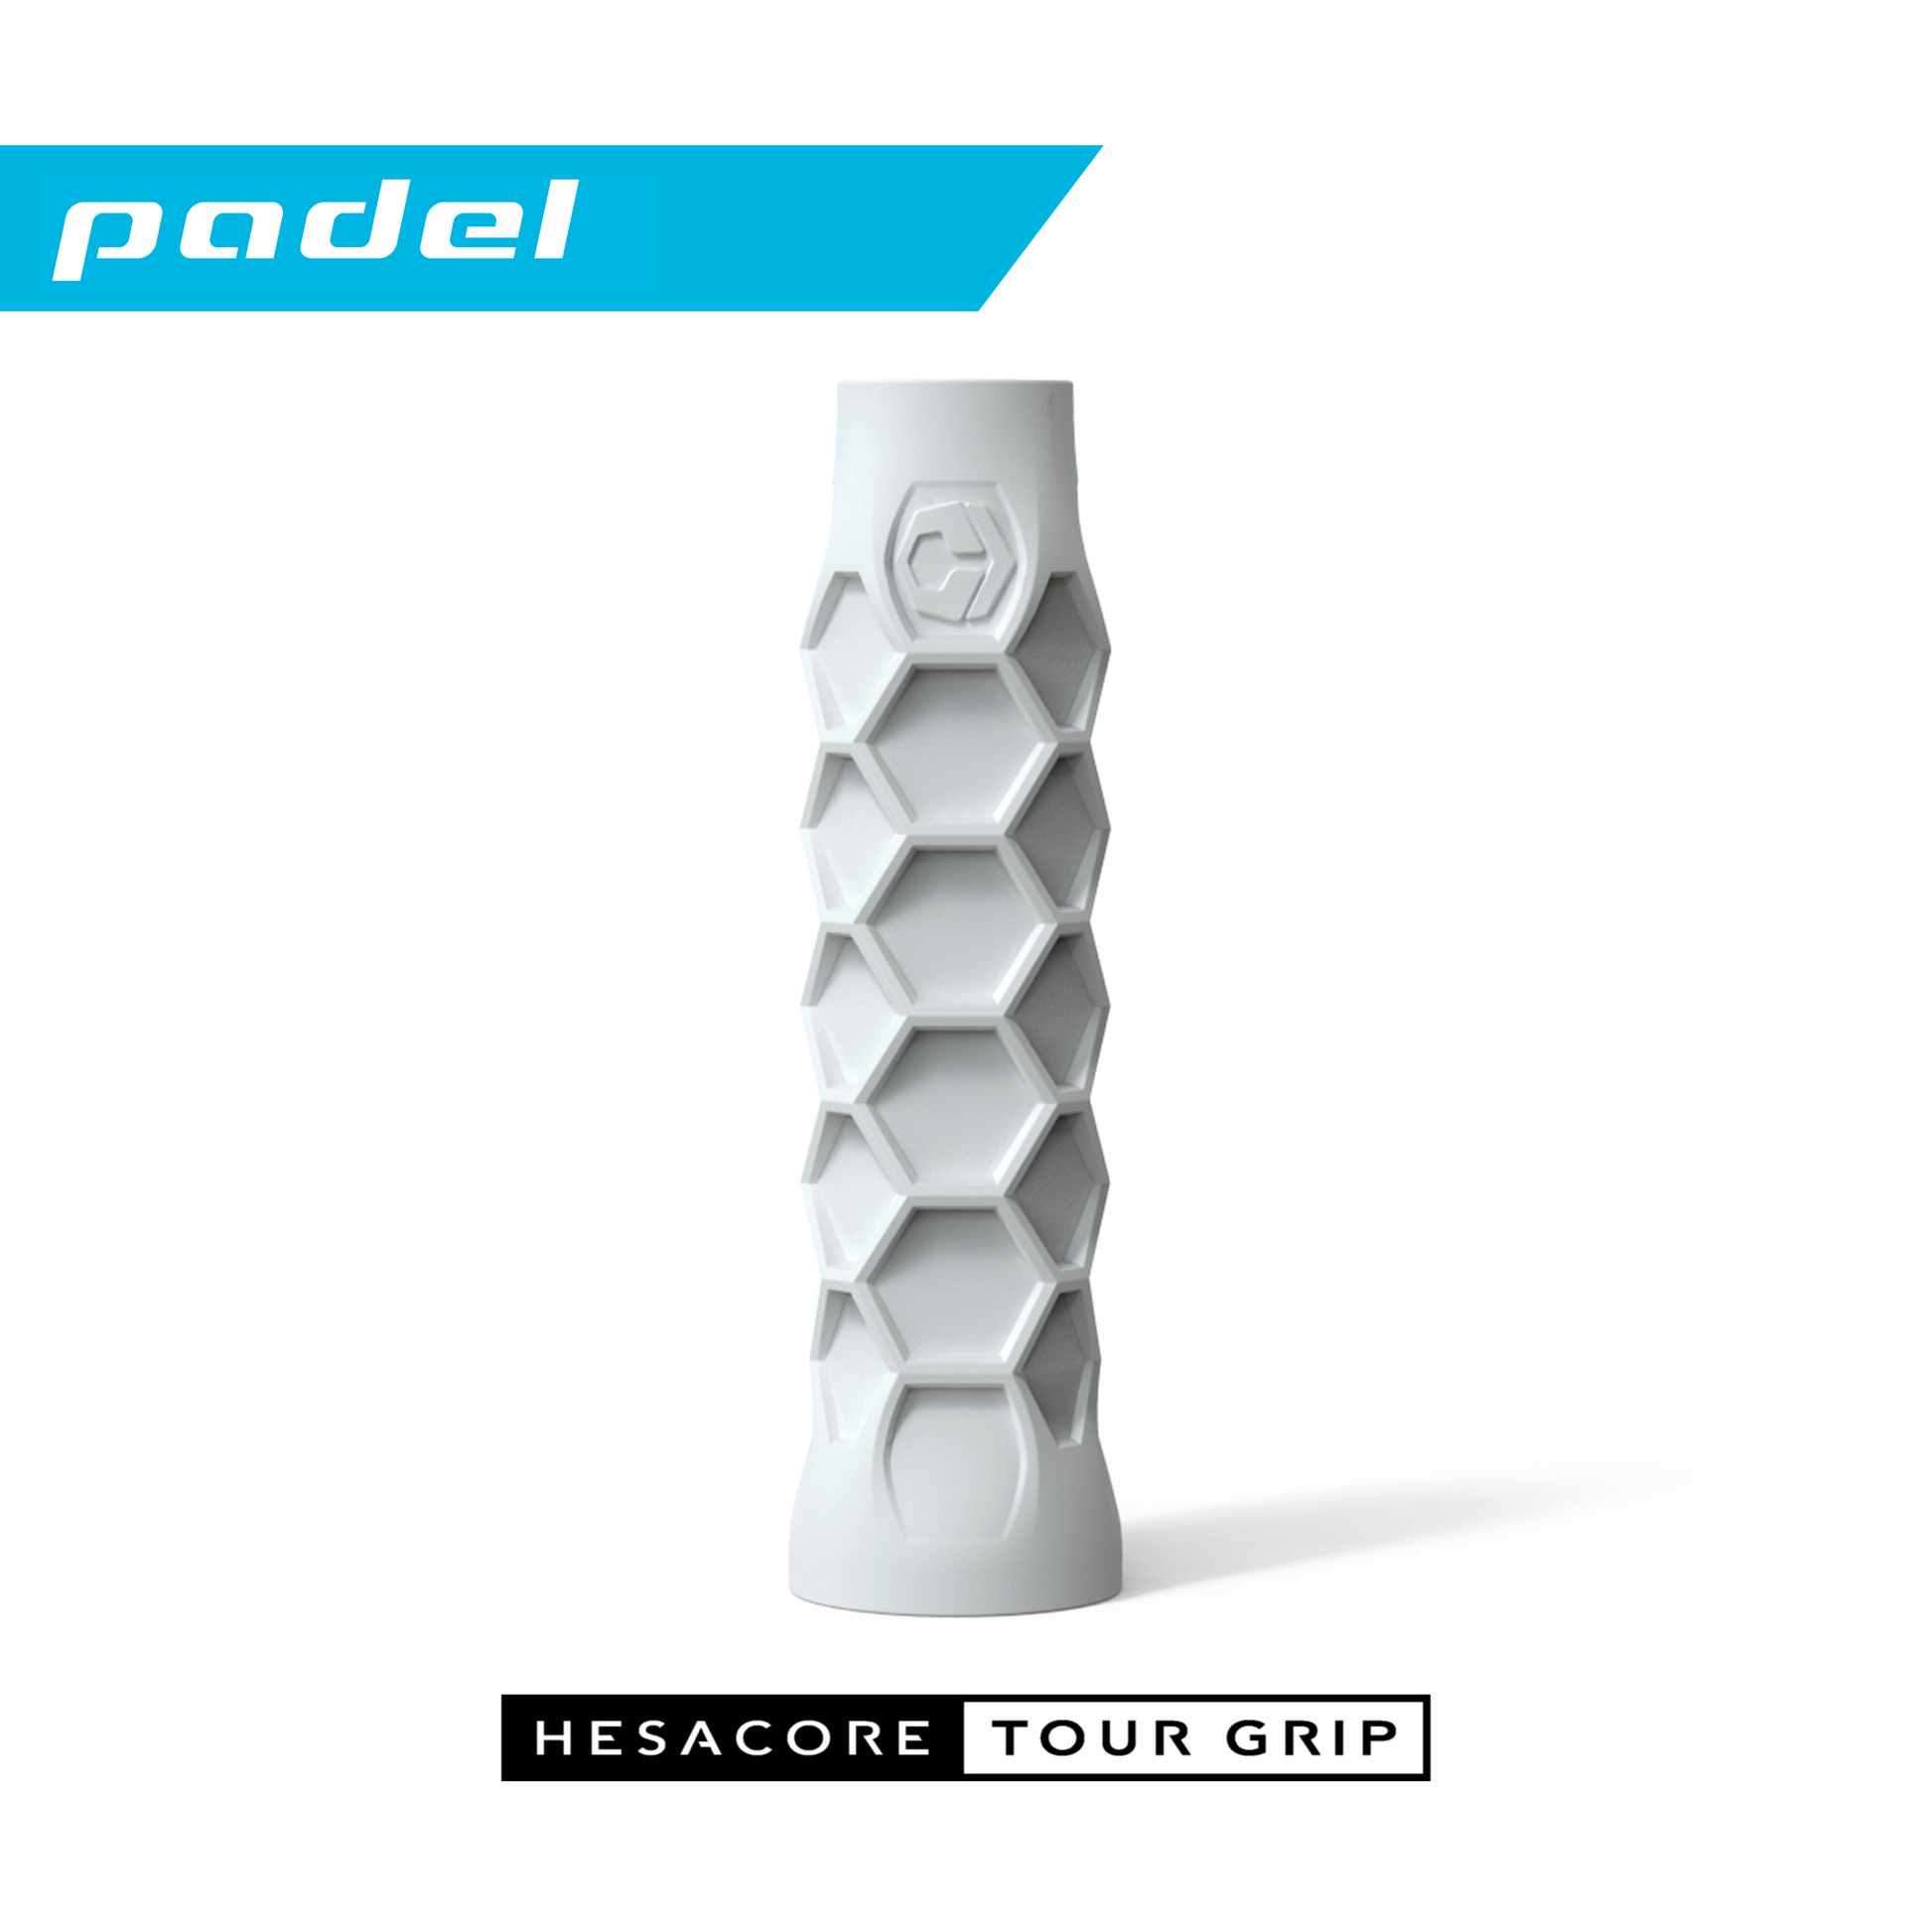 Pure32 Padel Type C30 Padel racket - Hesacore grip